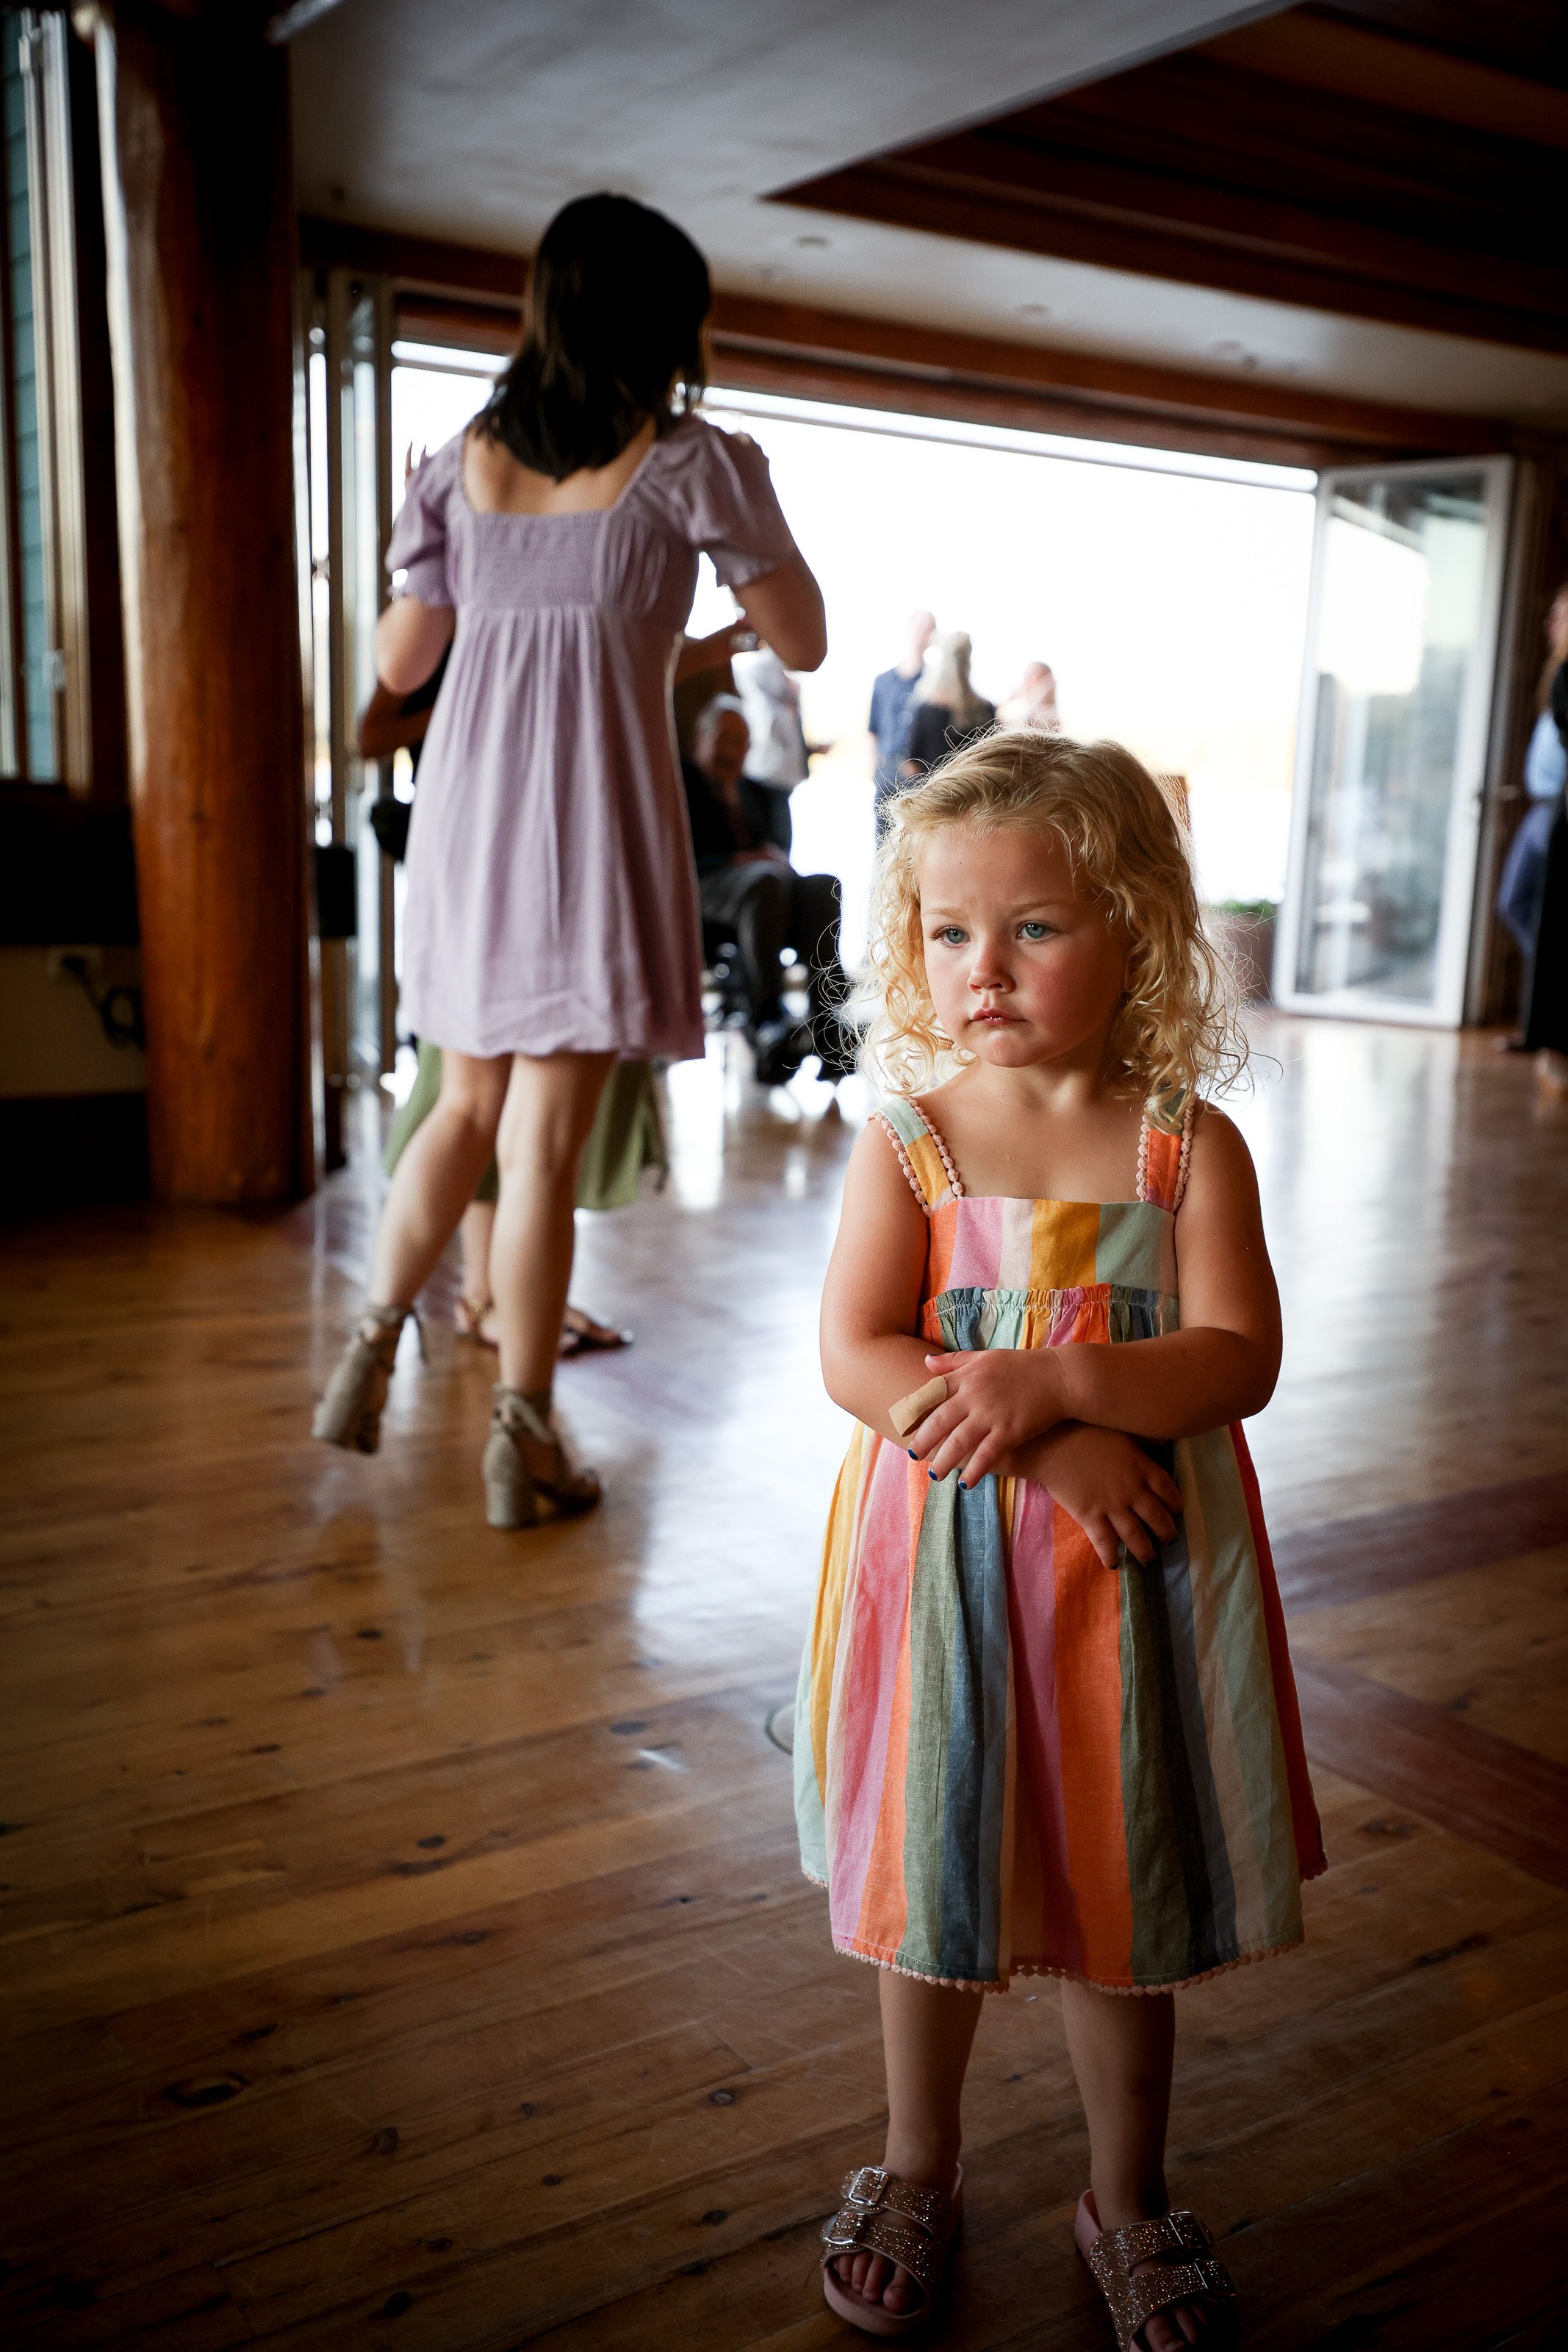 Young girl at reception